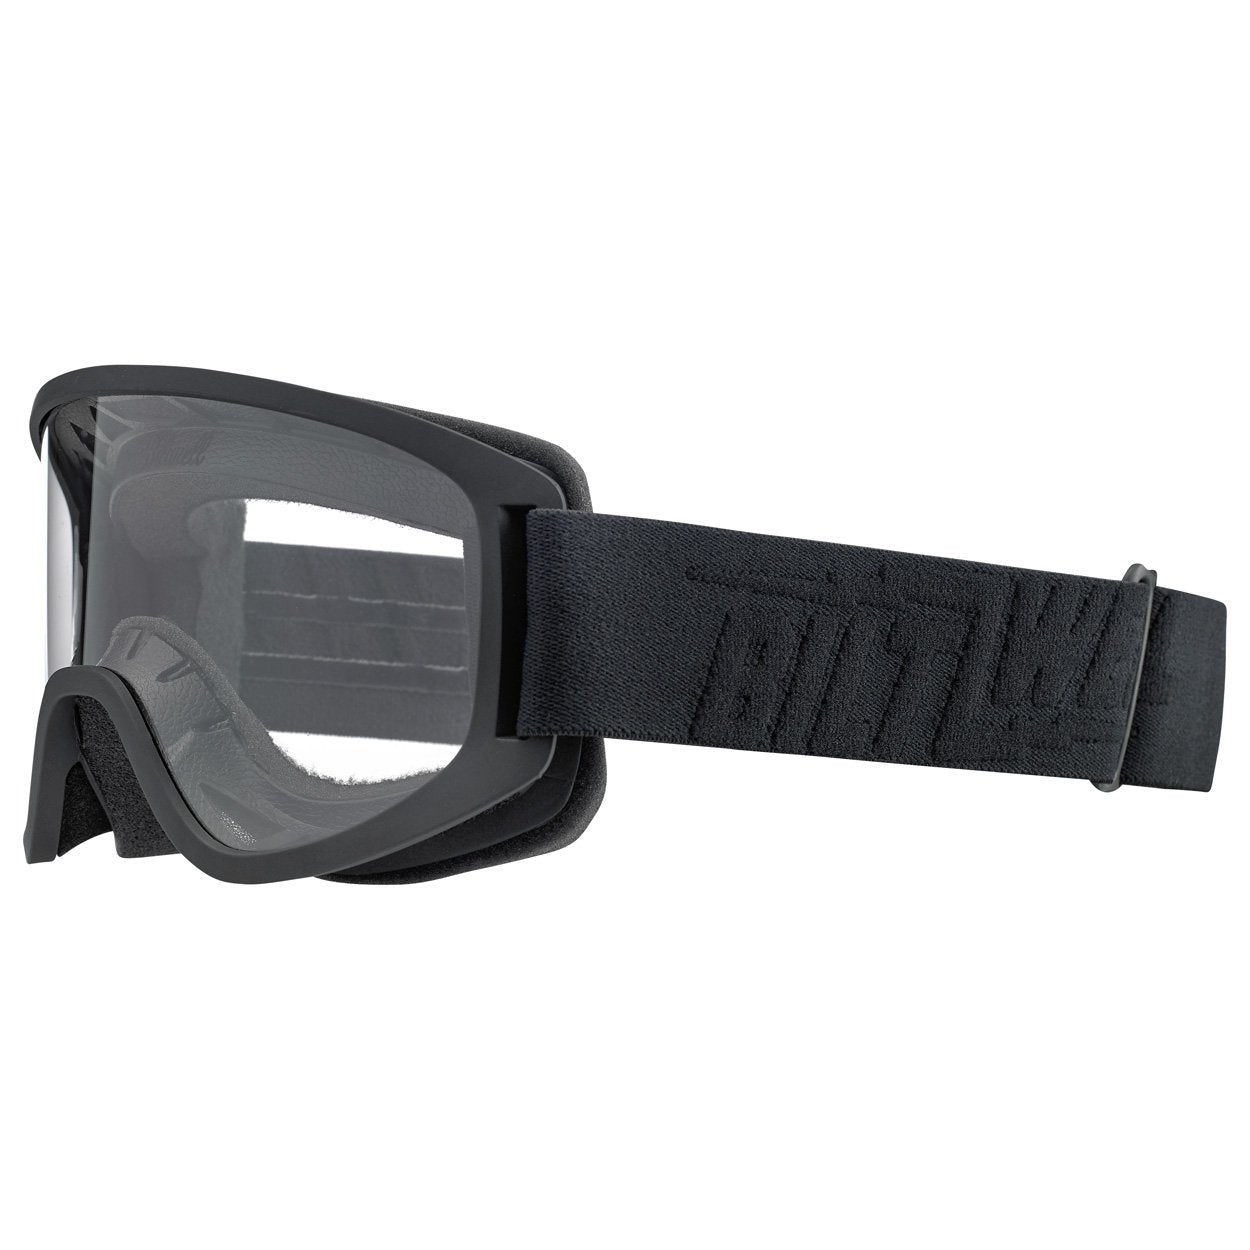 Biltwell Moto 2.0 Goggles - Blackout